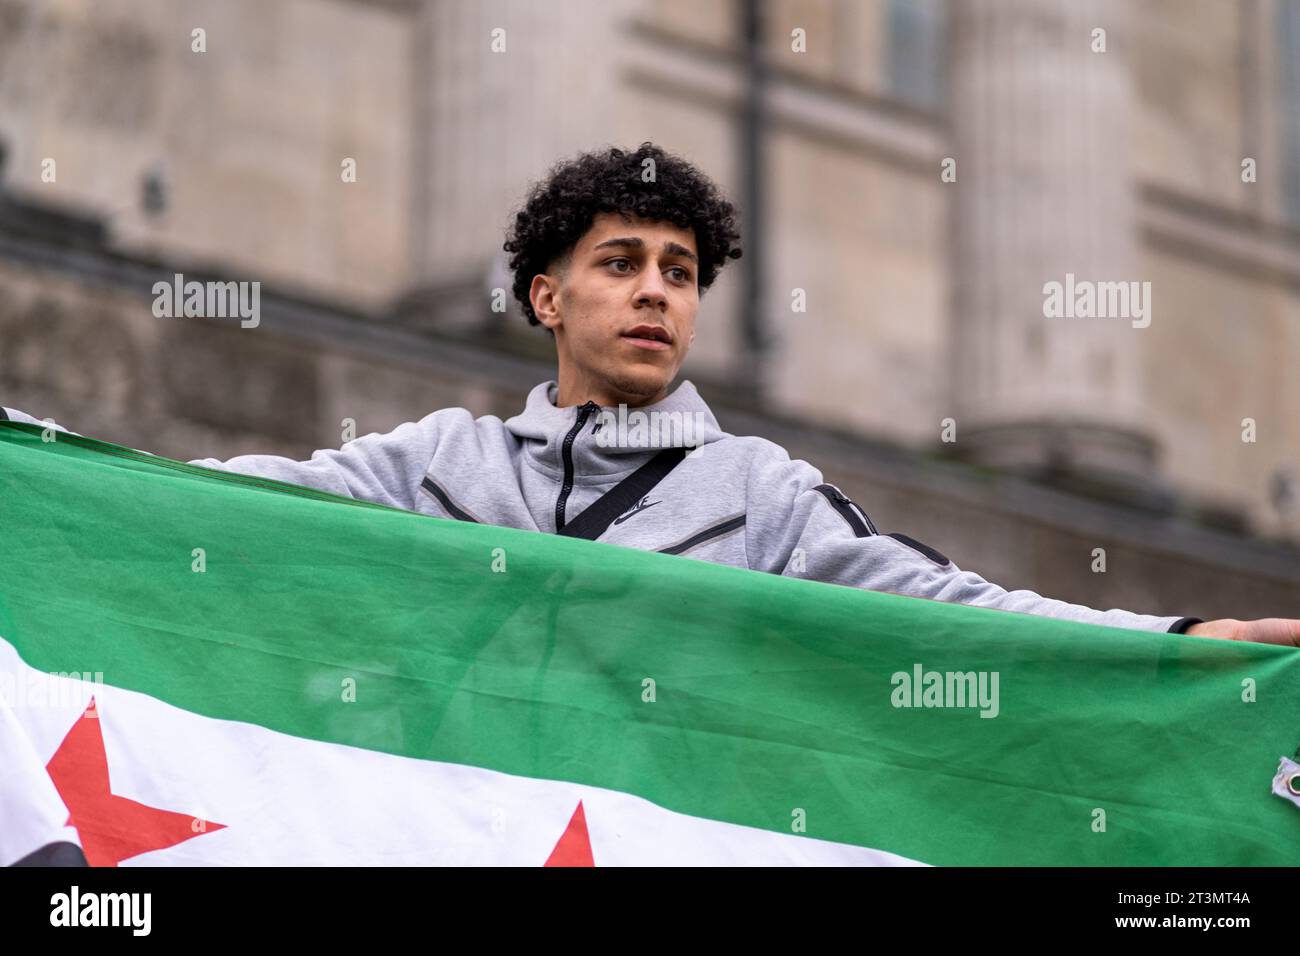 Free Palestine march in Birmingham, UK. 21/20/2023 Stock Photo